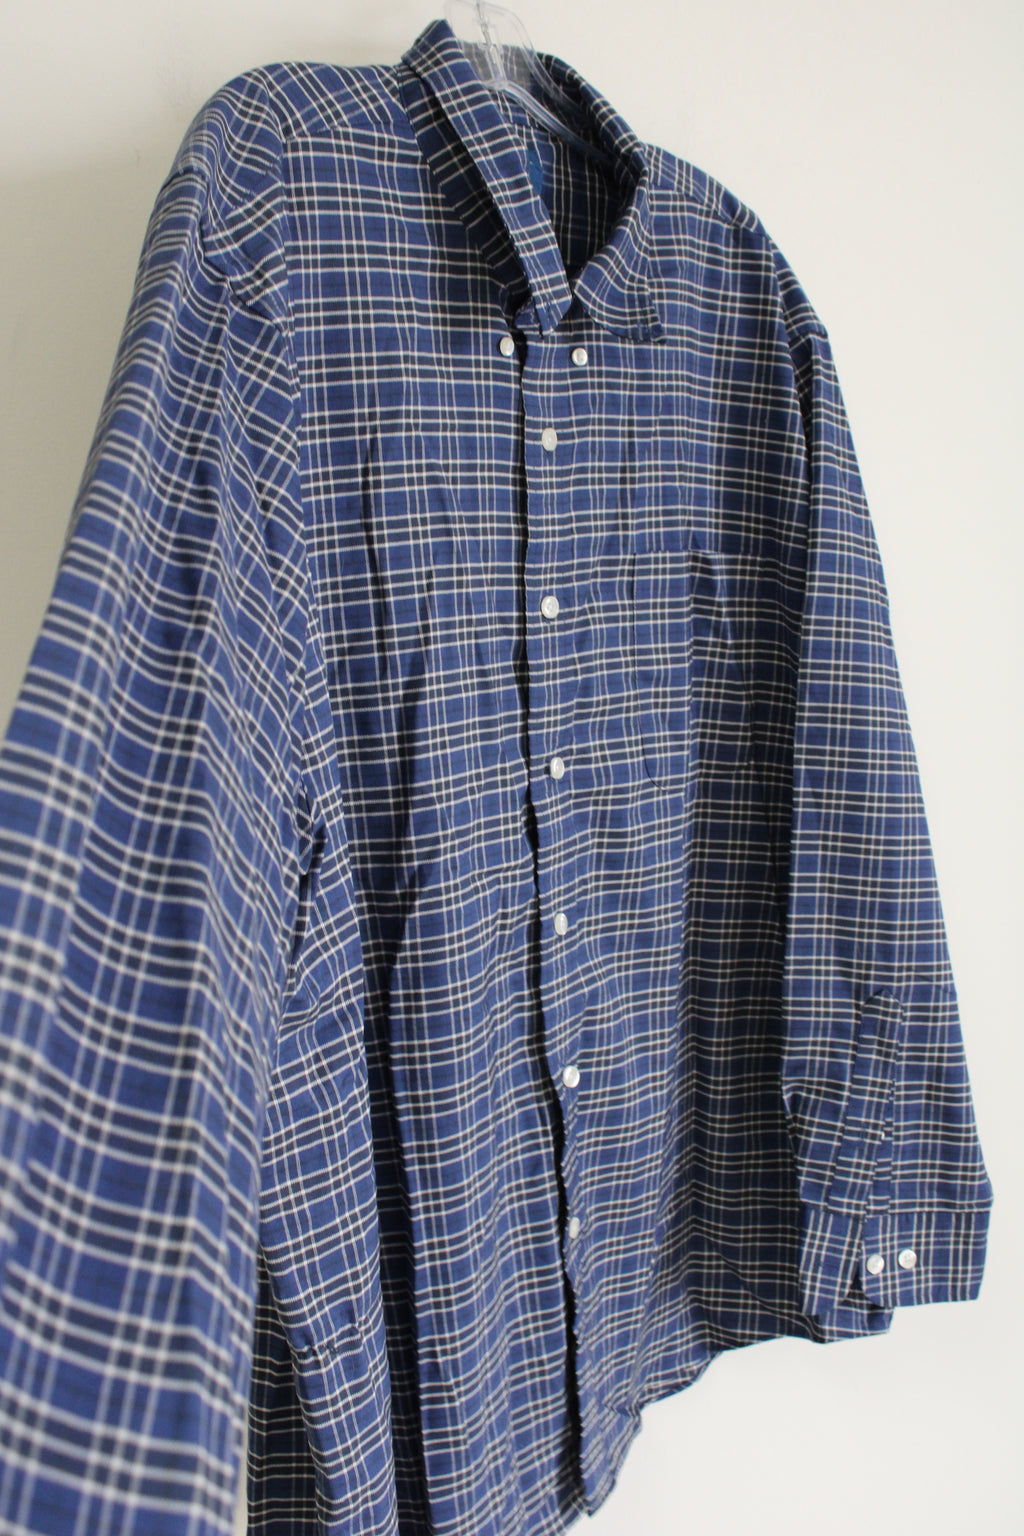 Towncraft Blue Plaid Button Down Shirt | XL